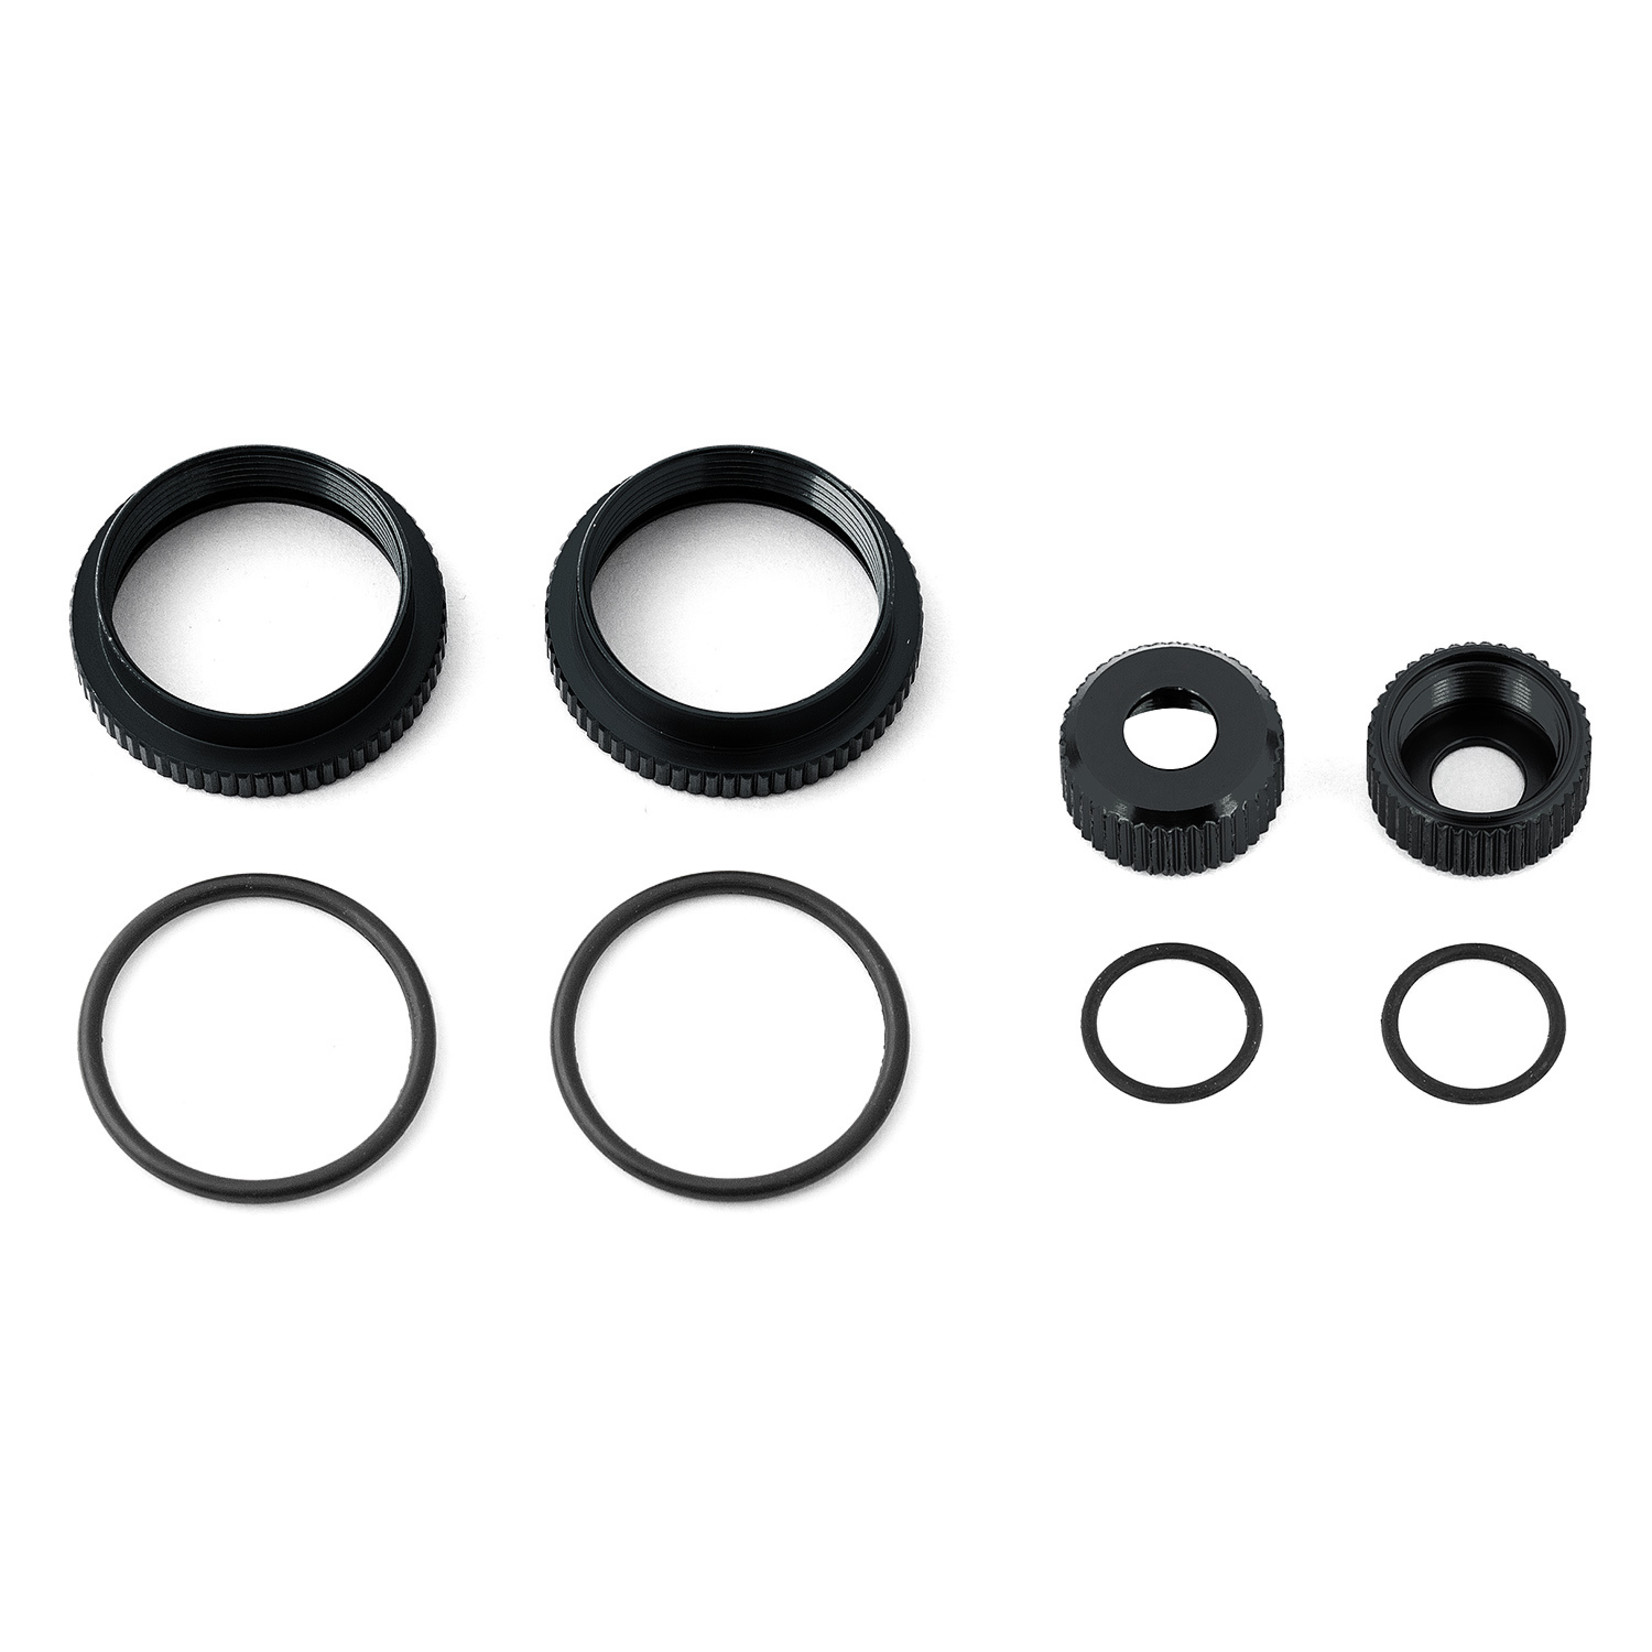 Team Associated 16mm Shock Collar & Seal Retainer Set, Black